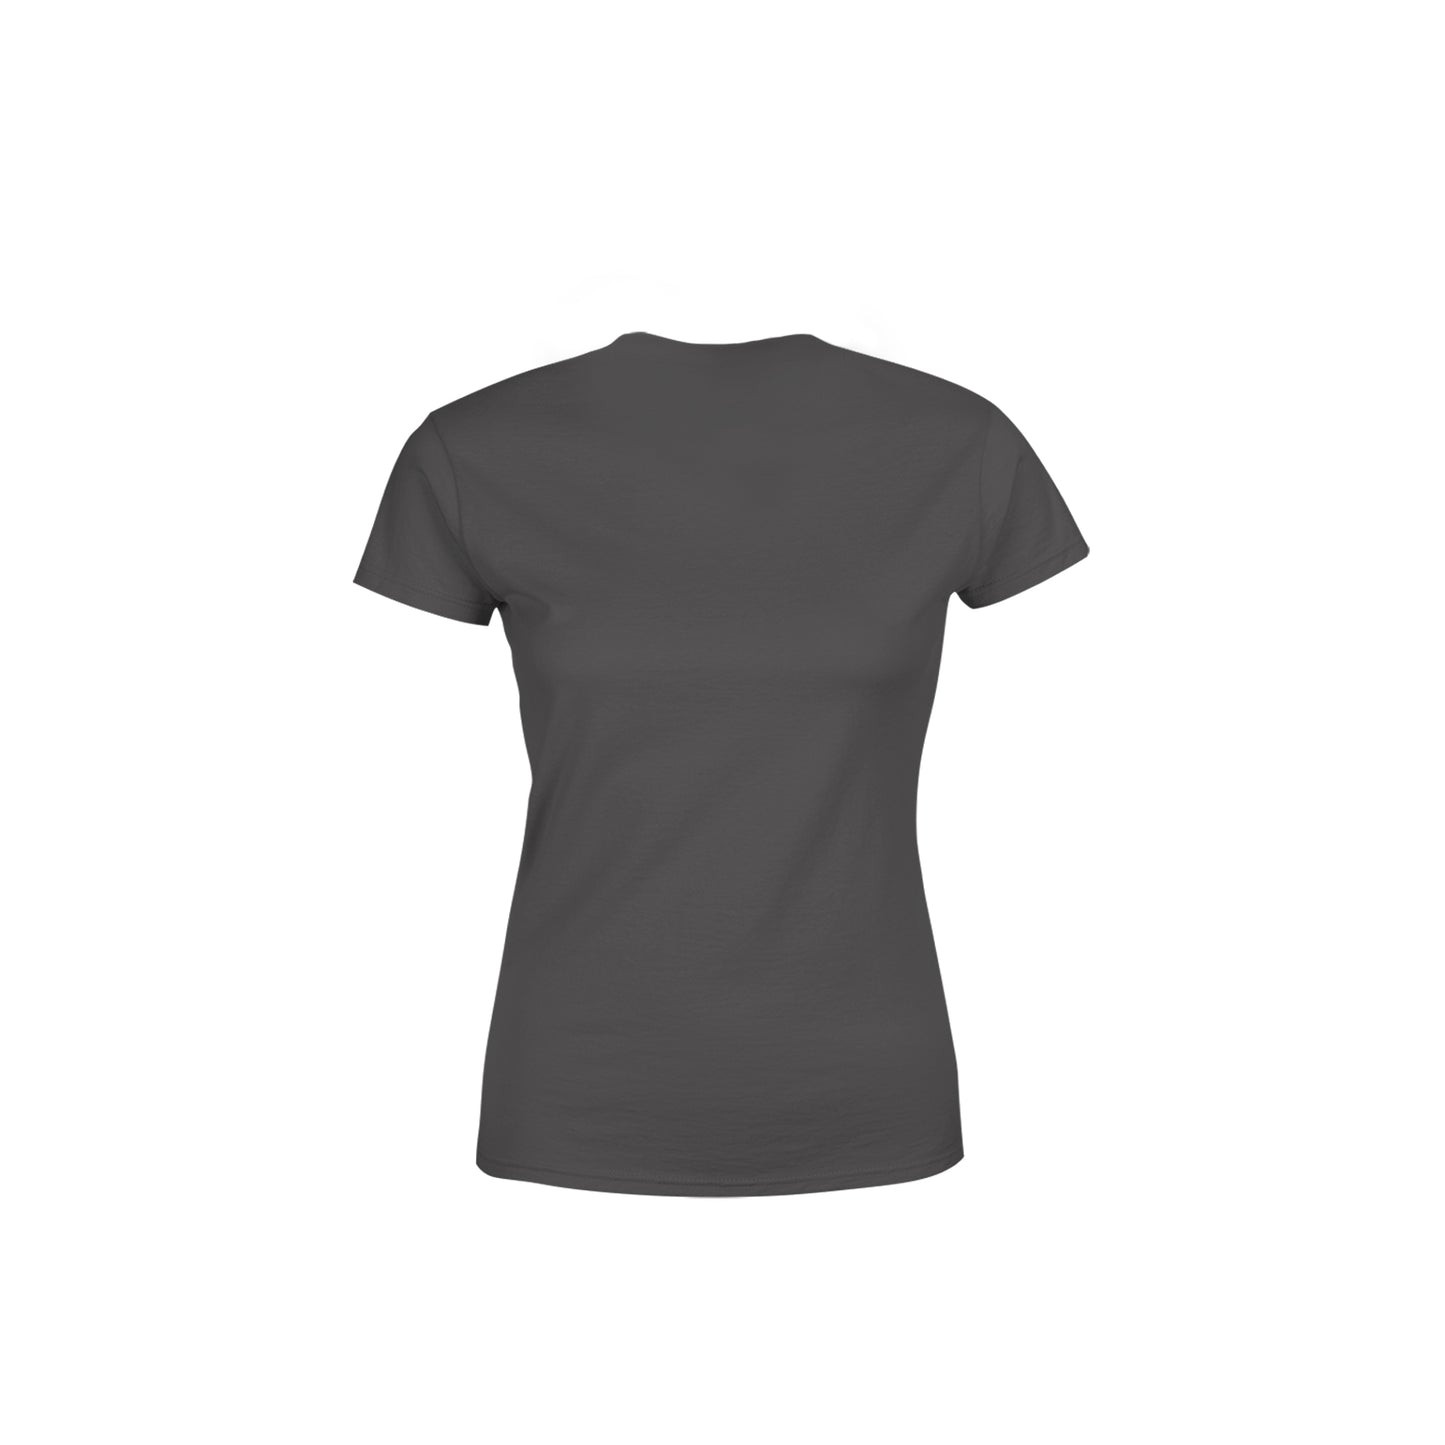 35 Number Women's T-Shirt (Charcoal Grey)